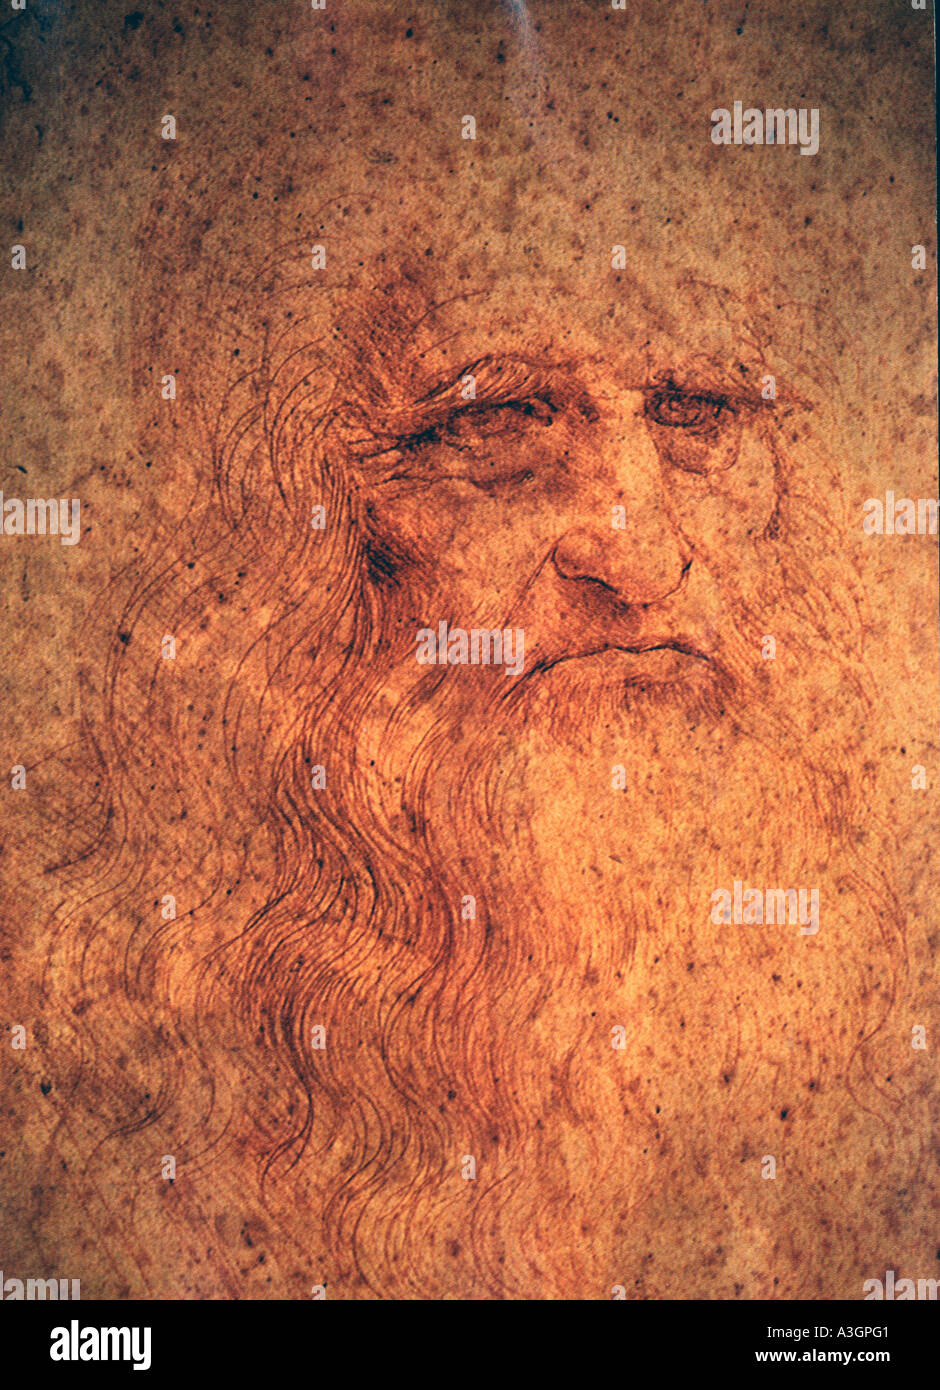 self portrait by Leonardo da Vinci Stock Photo